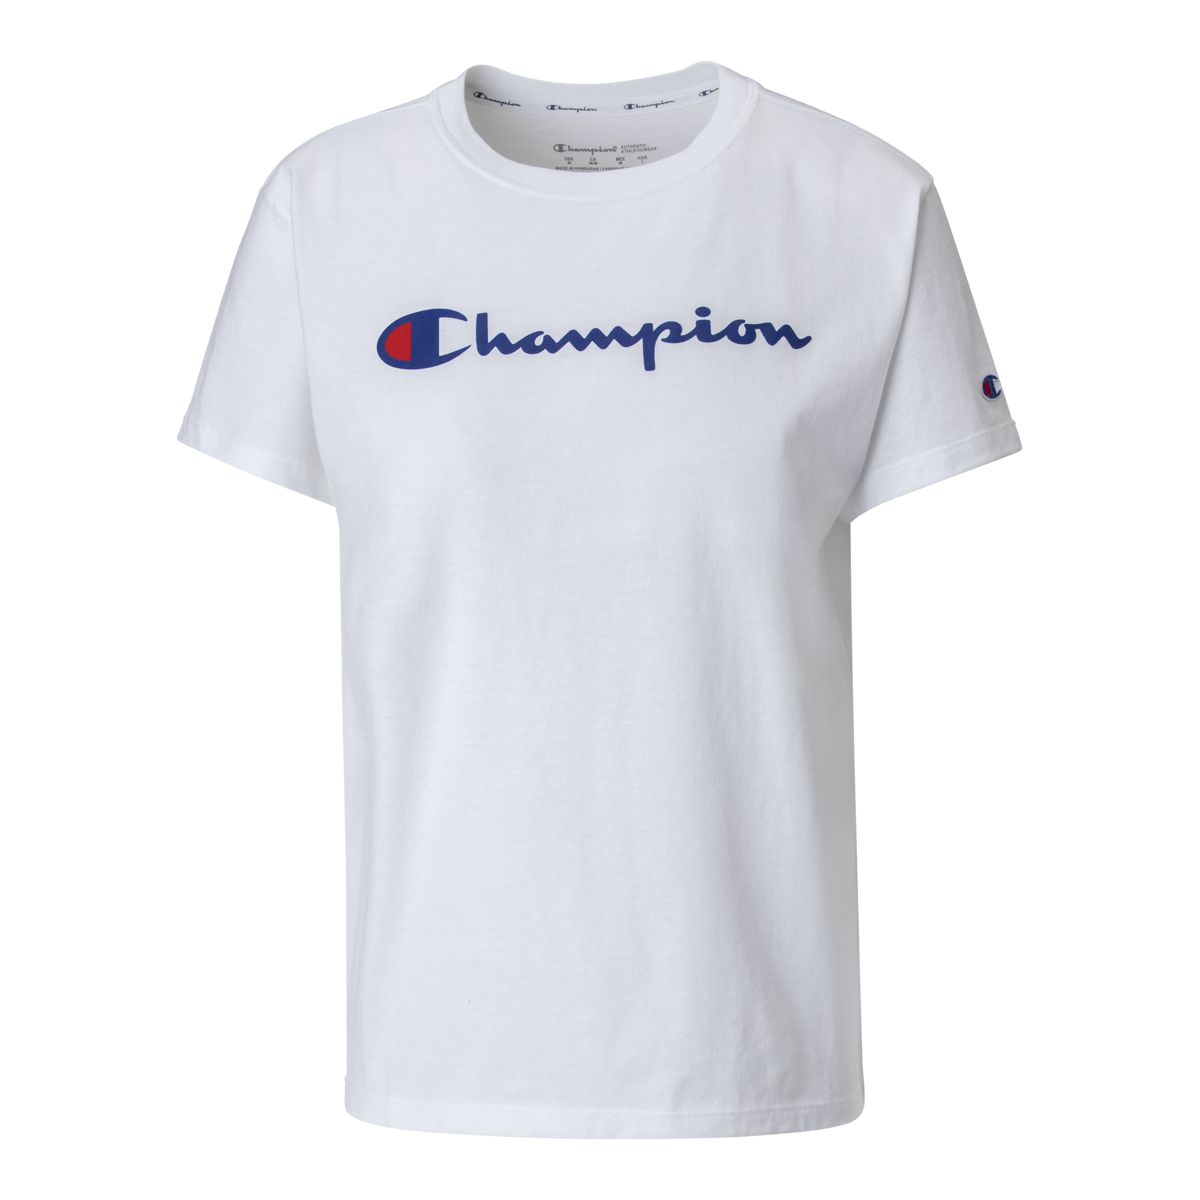 Champion womens Tee Shirt, Classic Crewneck Tee Shirt, Best Cotton